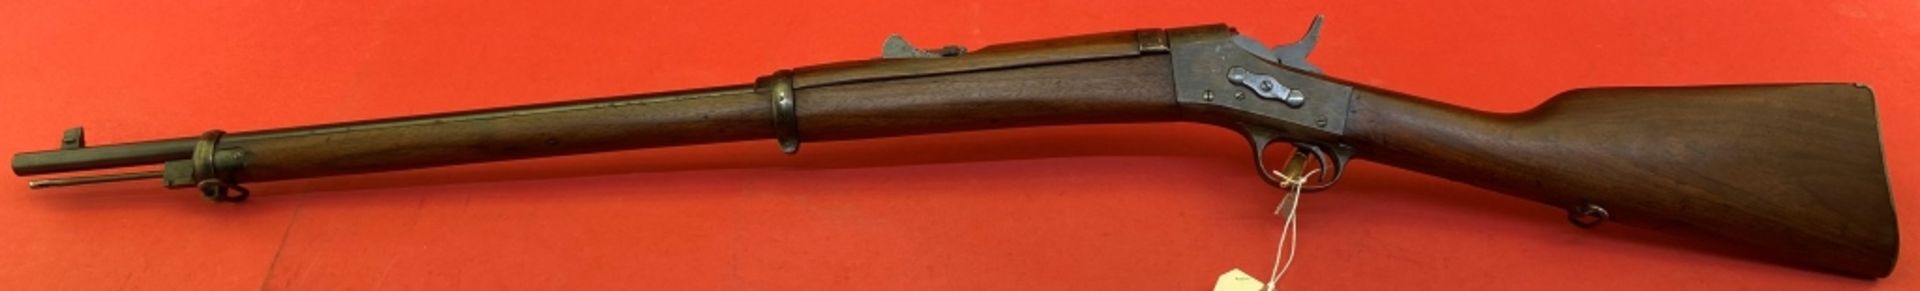 Remington No.5 7mm Mauser Rifle - Image 10 of 10